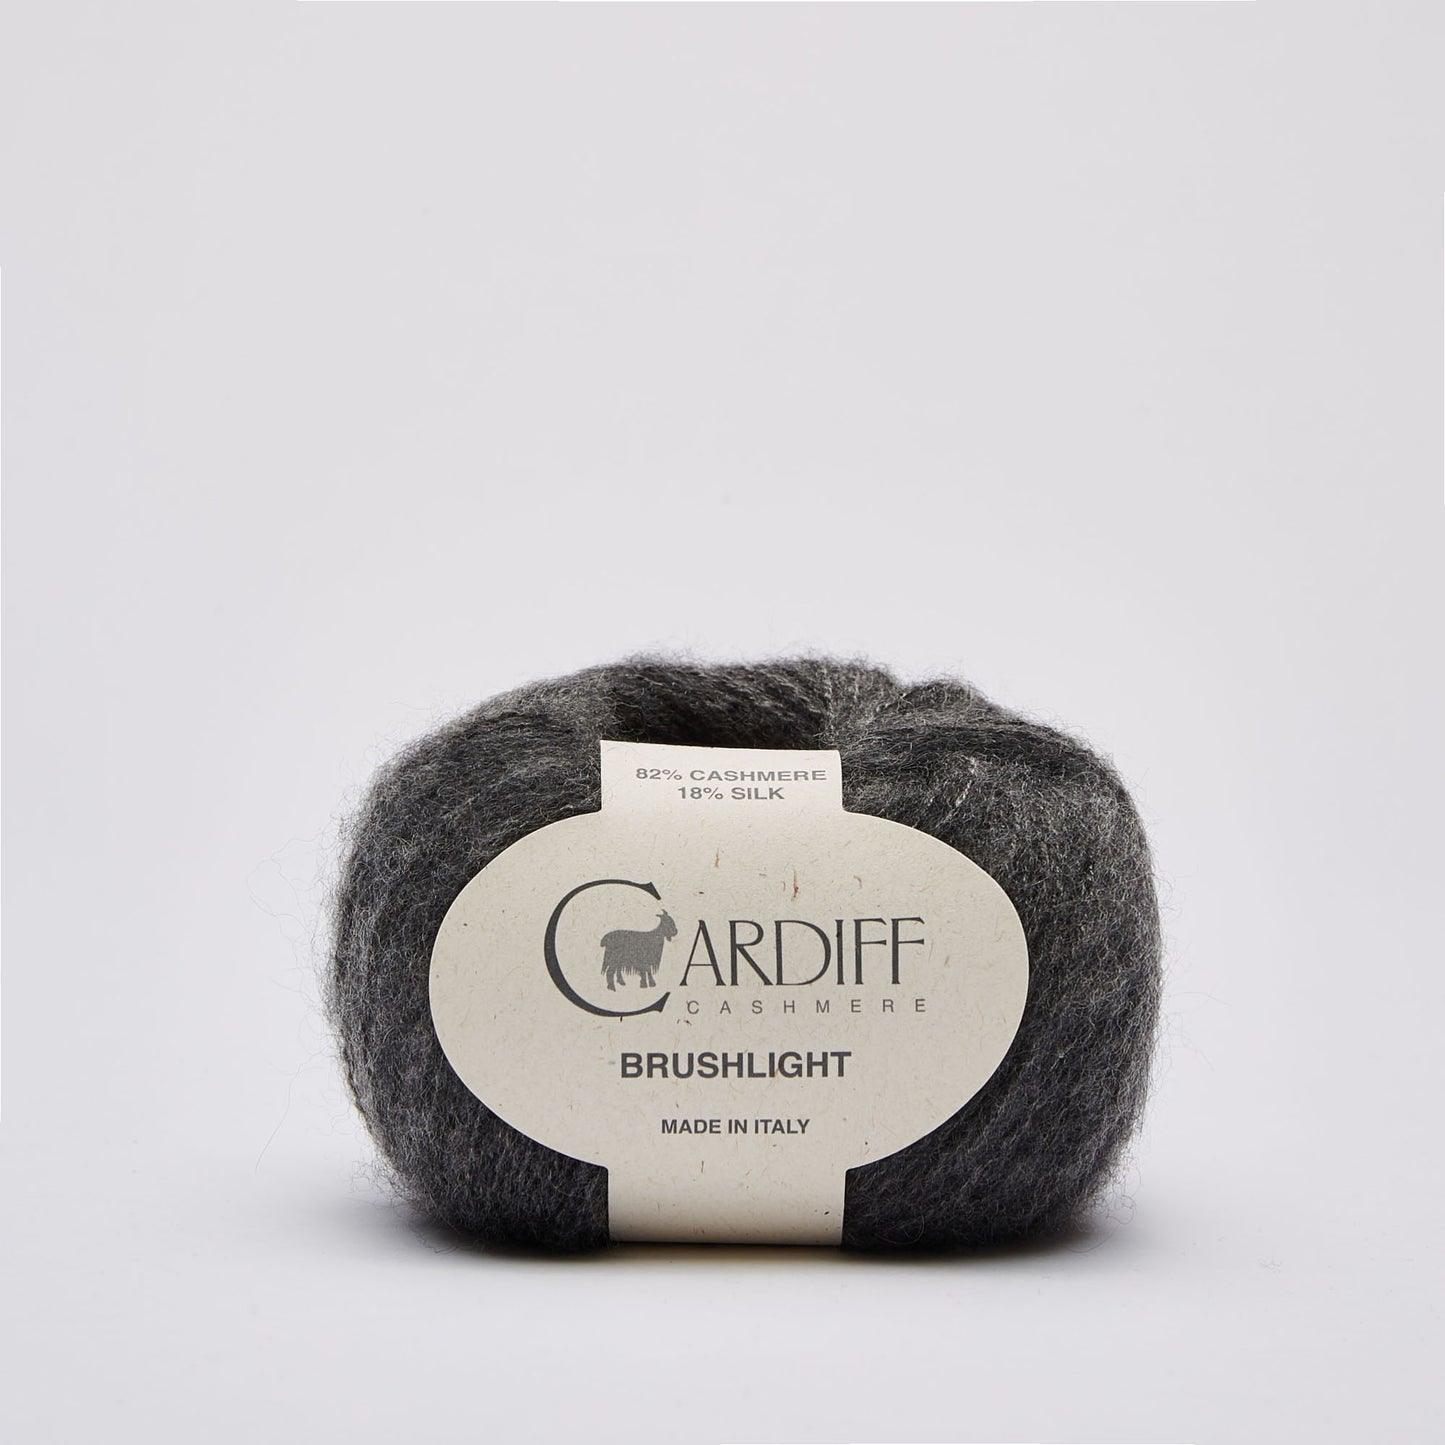 Cardiff BRUSHLIGHT gentle yarn, 105, GREY MEL, comp: 82% Cashmere, 18% Silk